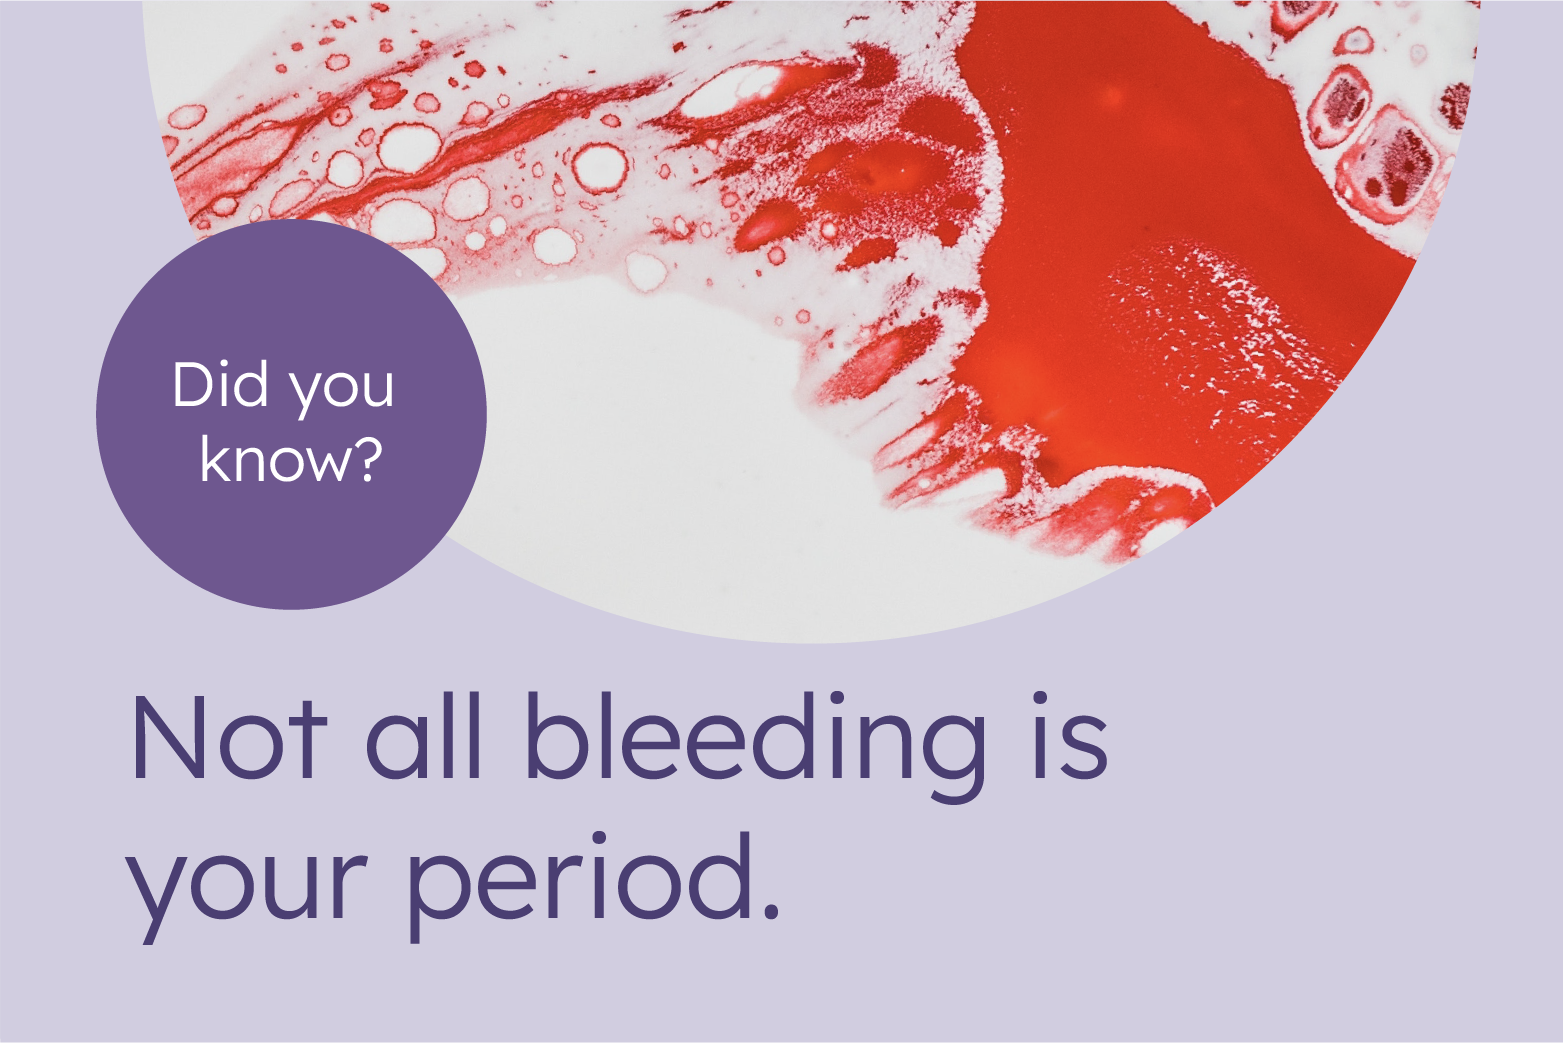 Implantation bleeding or period? PLEASE HELP - 1st Pregnancy